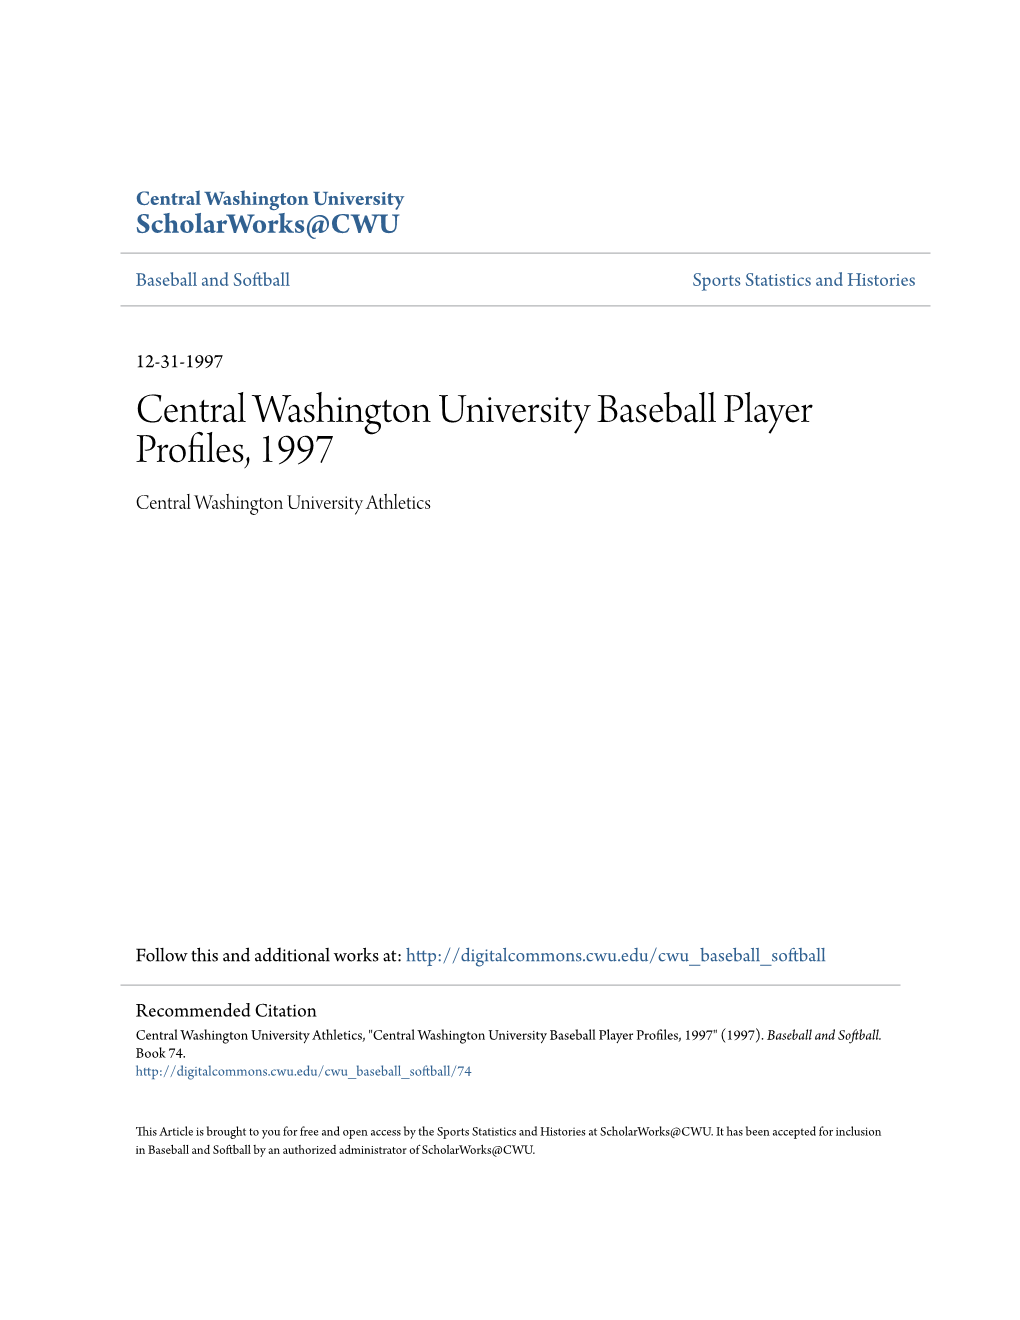 Central Washington University Baseball Player Profiles, 1997 Central Washington University Athletics